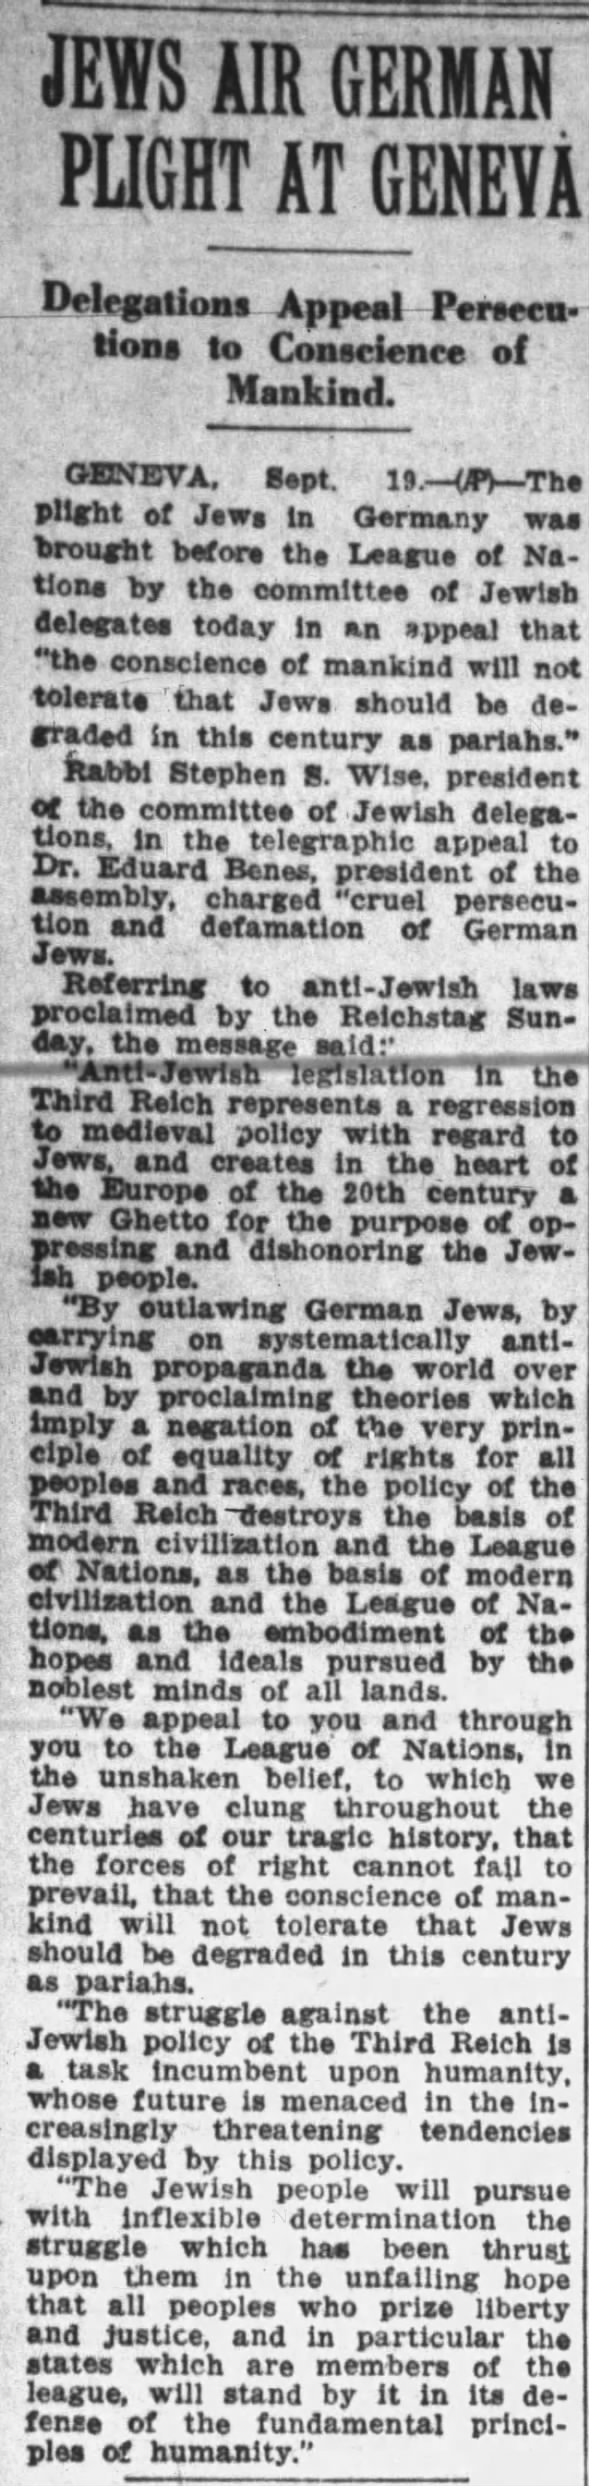 Jews Air German Plight At Geneva